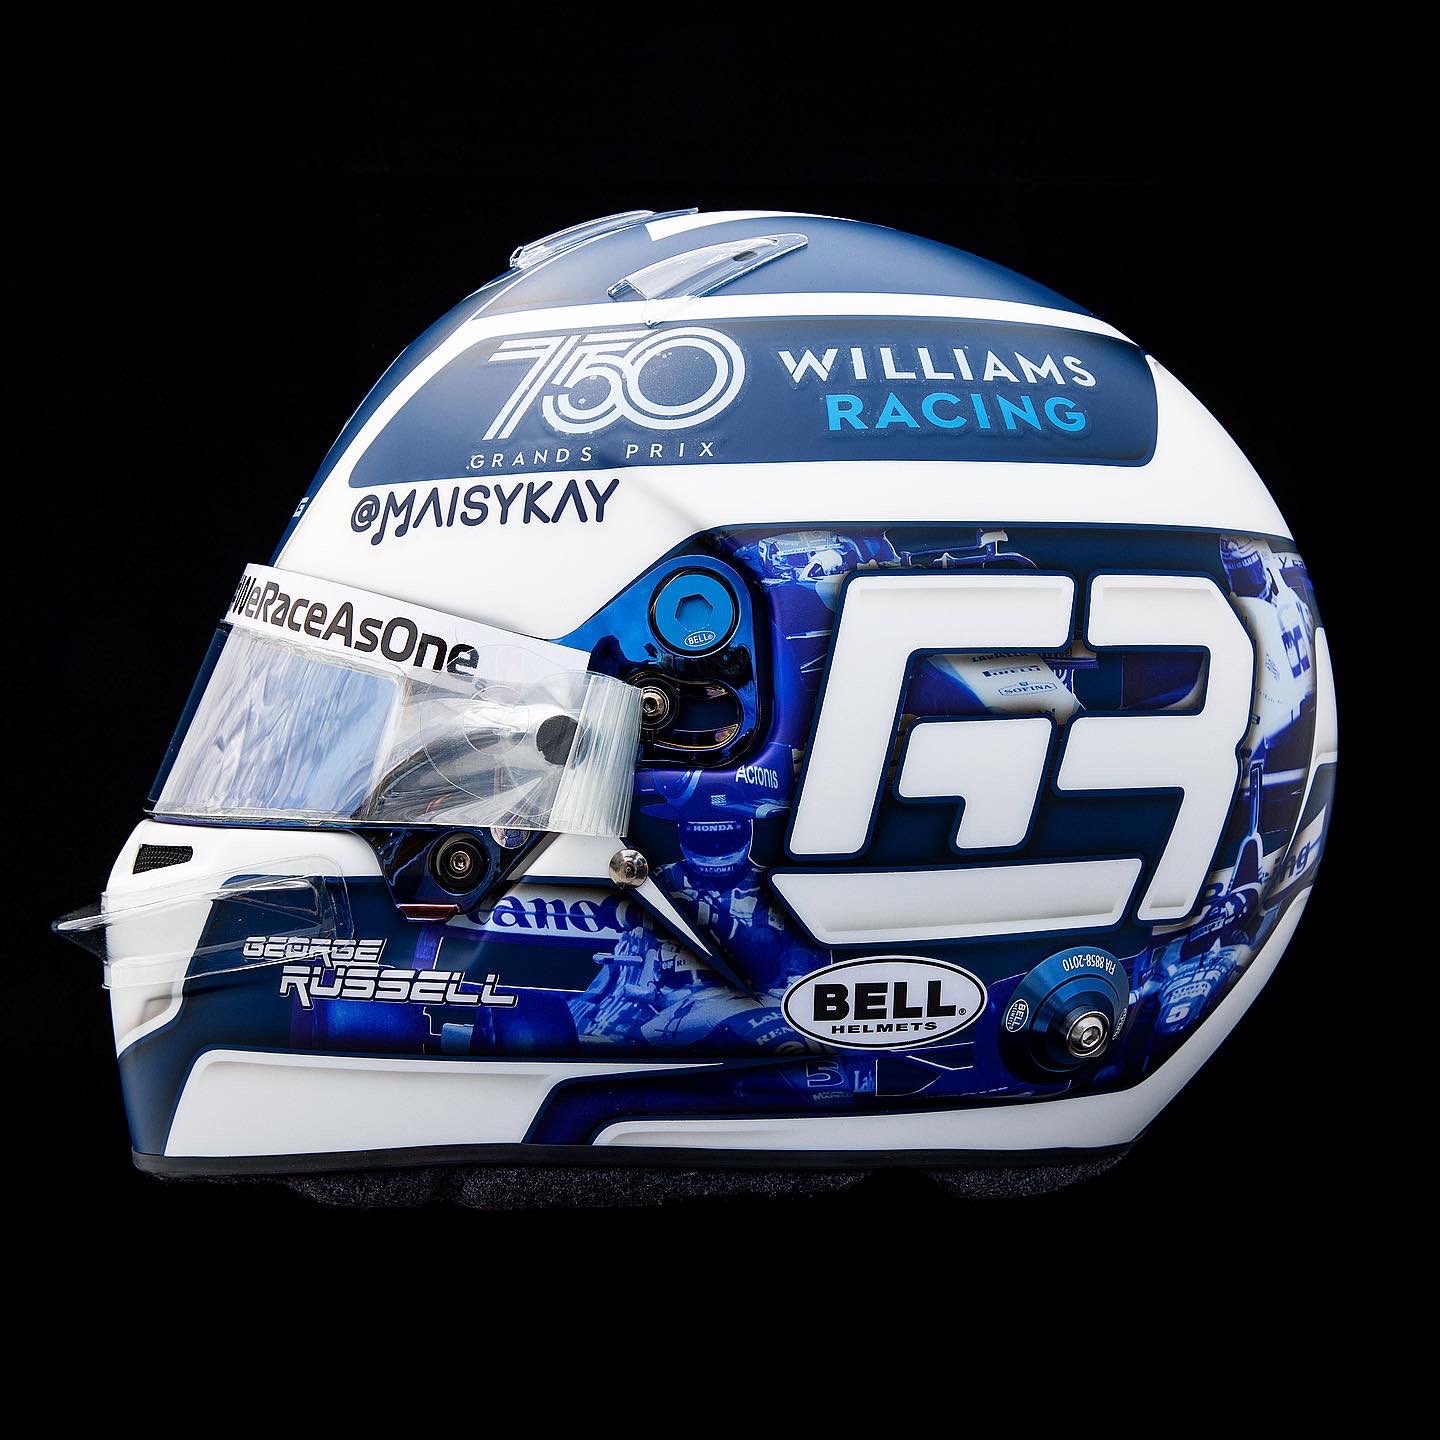 George Russell 2021 Monaco Grand Prix helmet